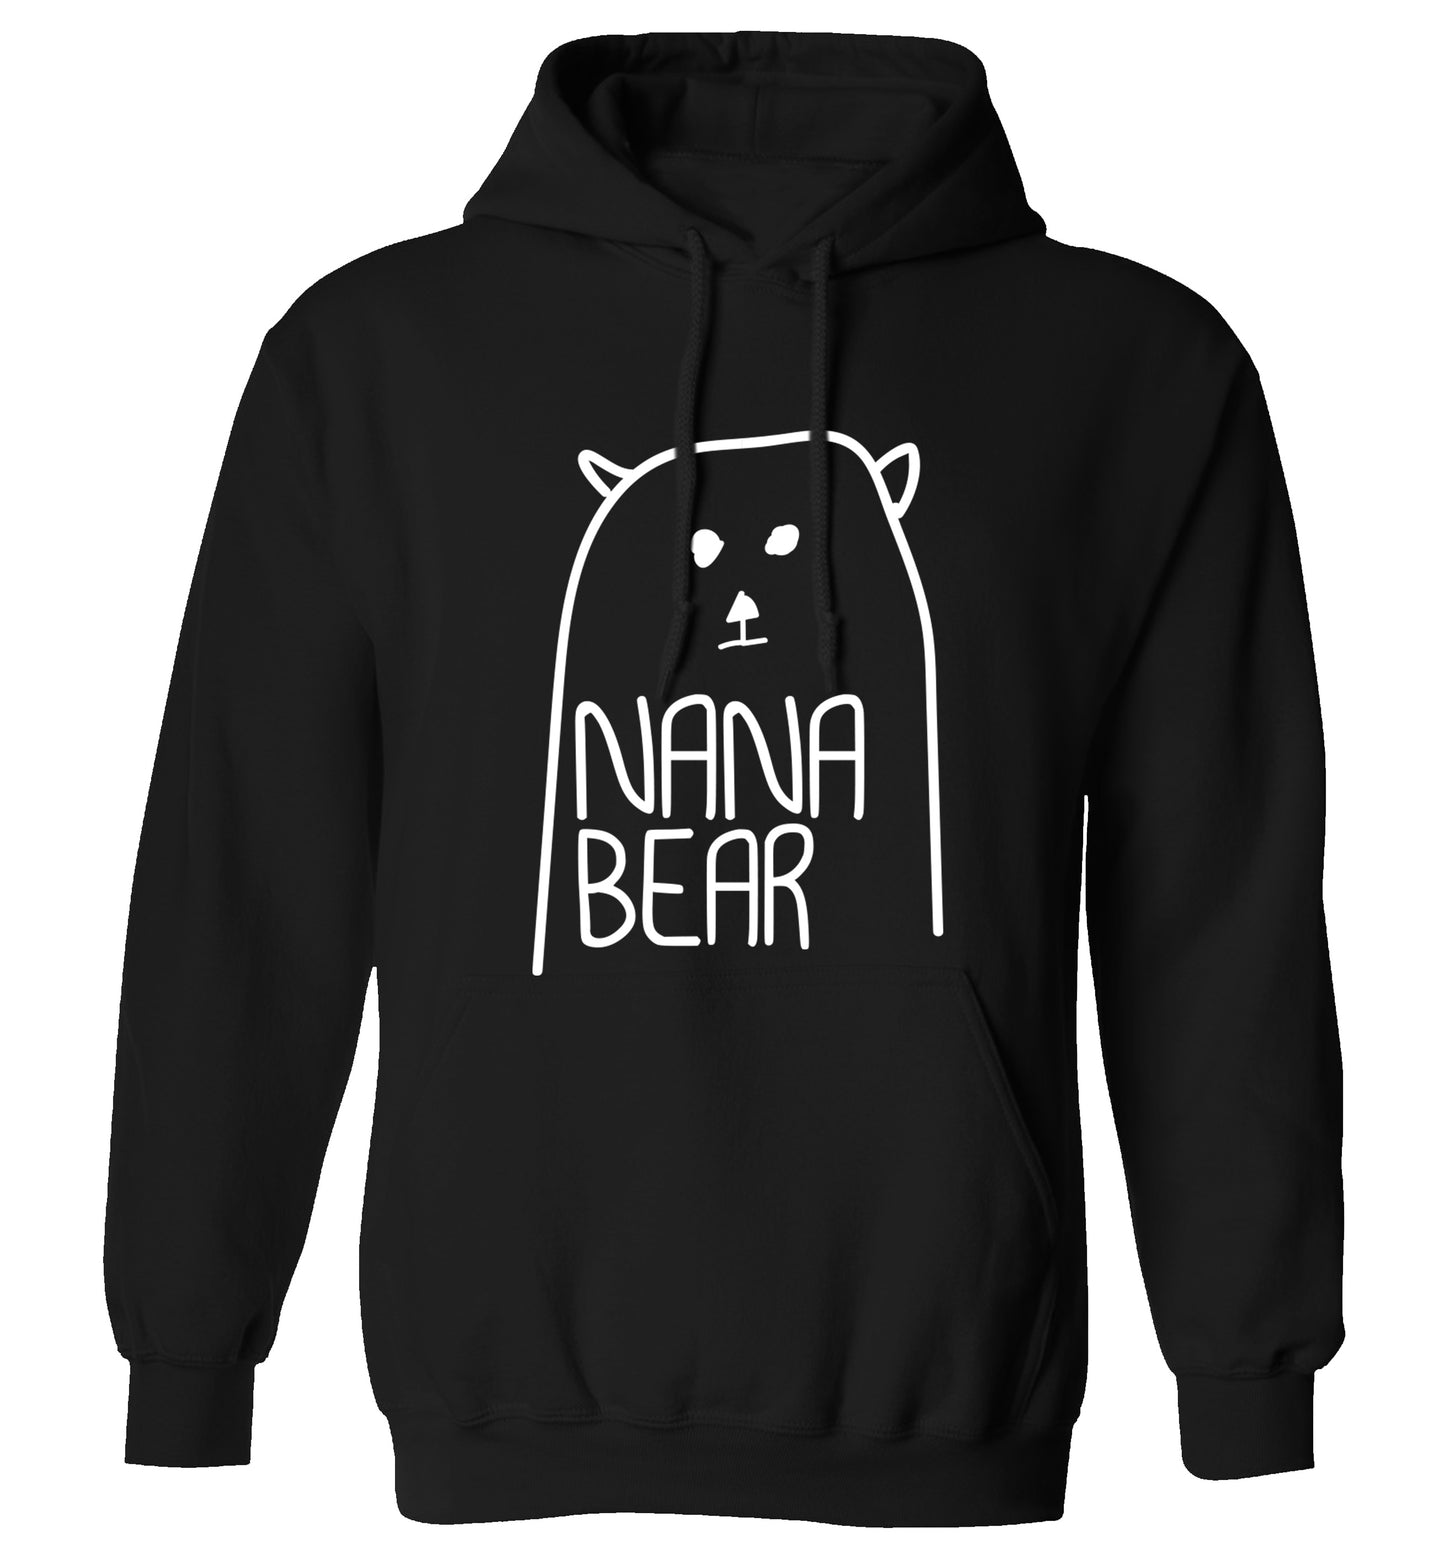 Nana bear adults unisex black hoodie 2XL